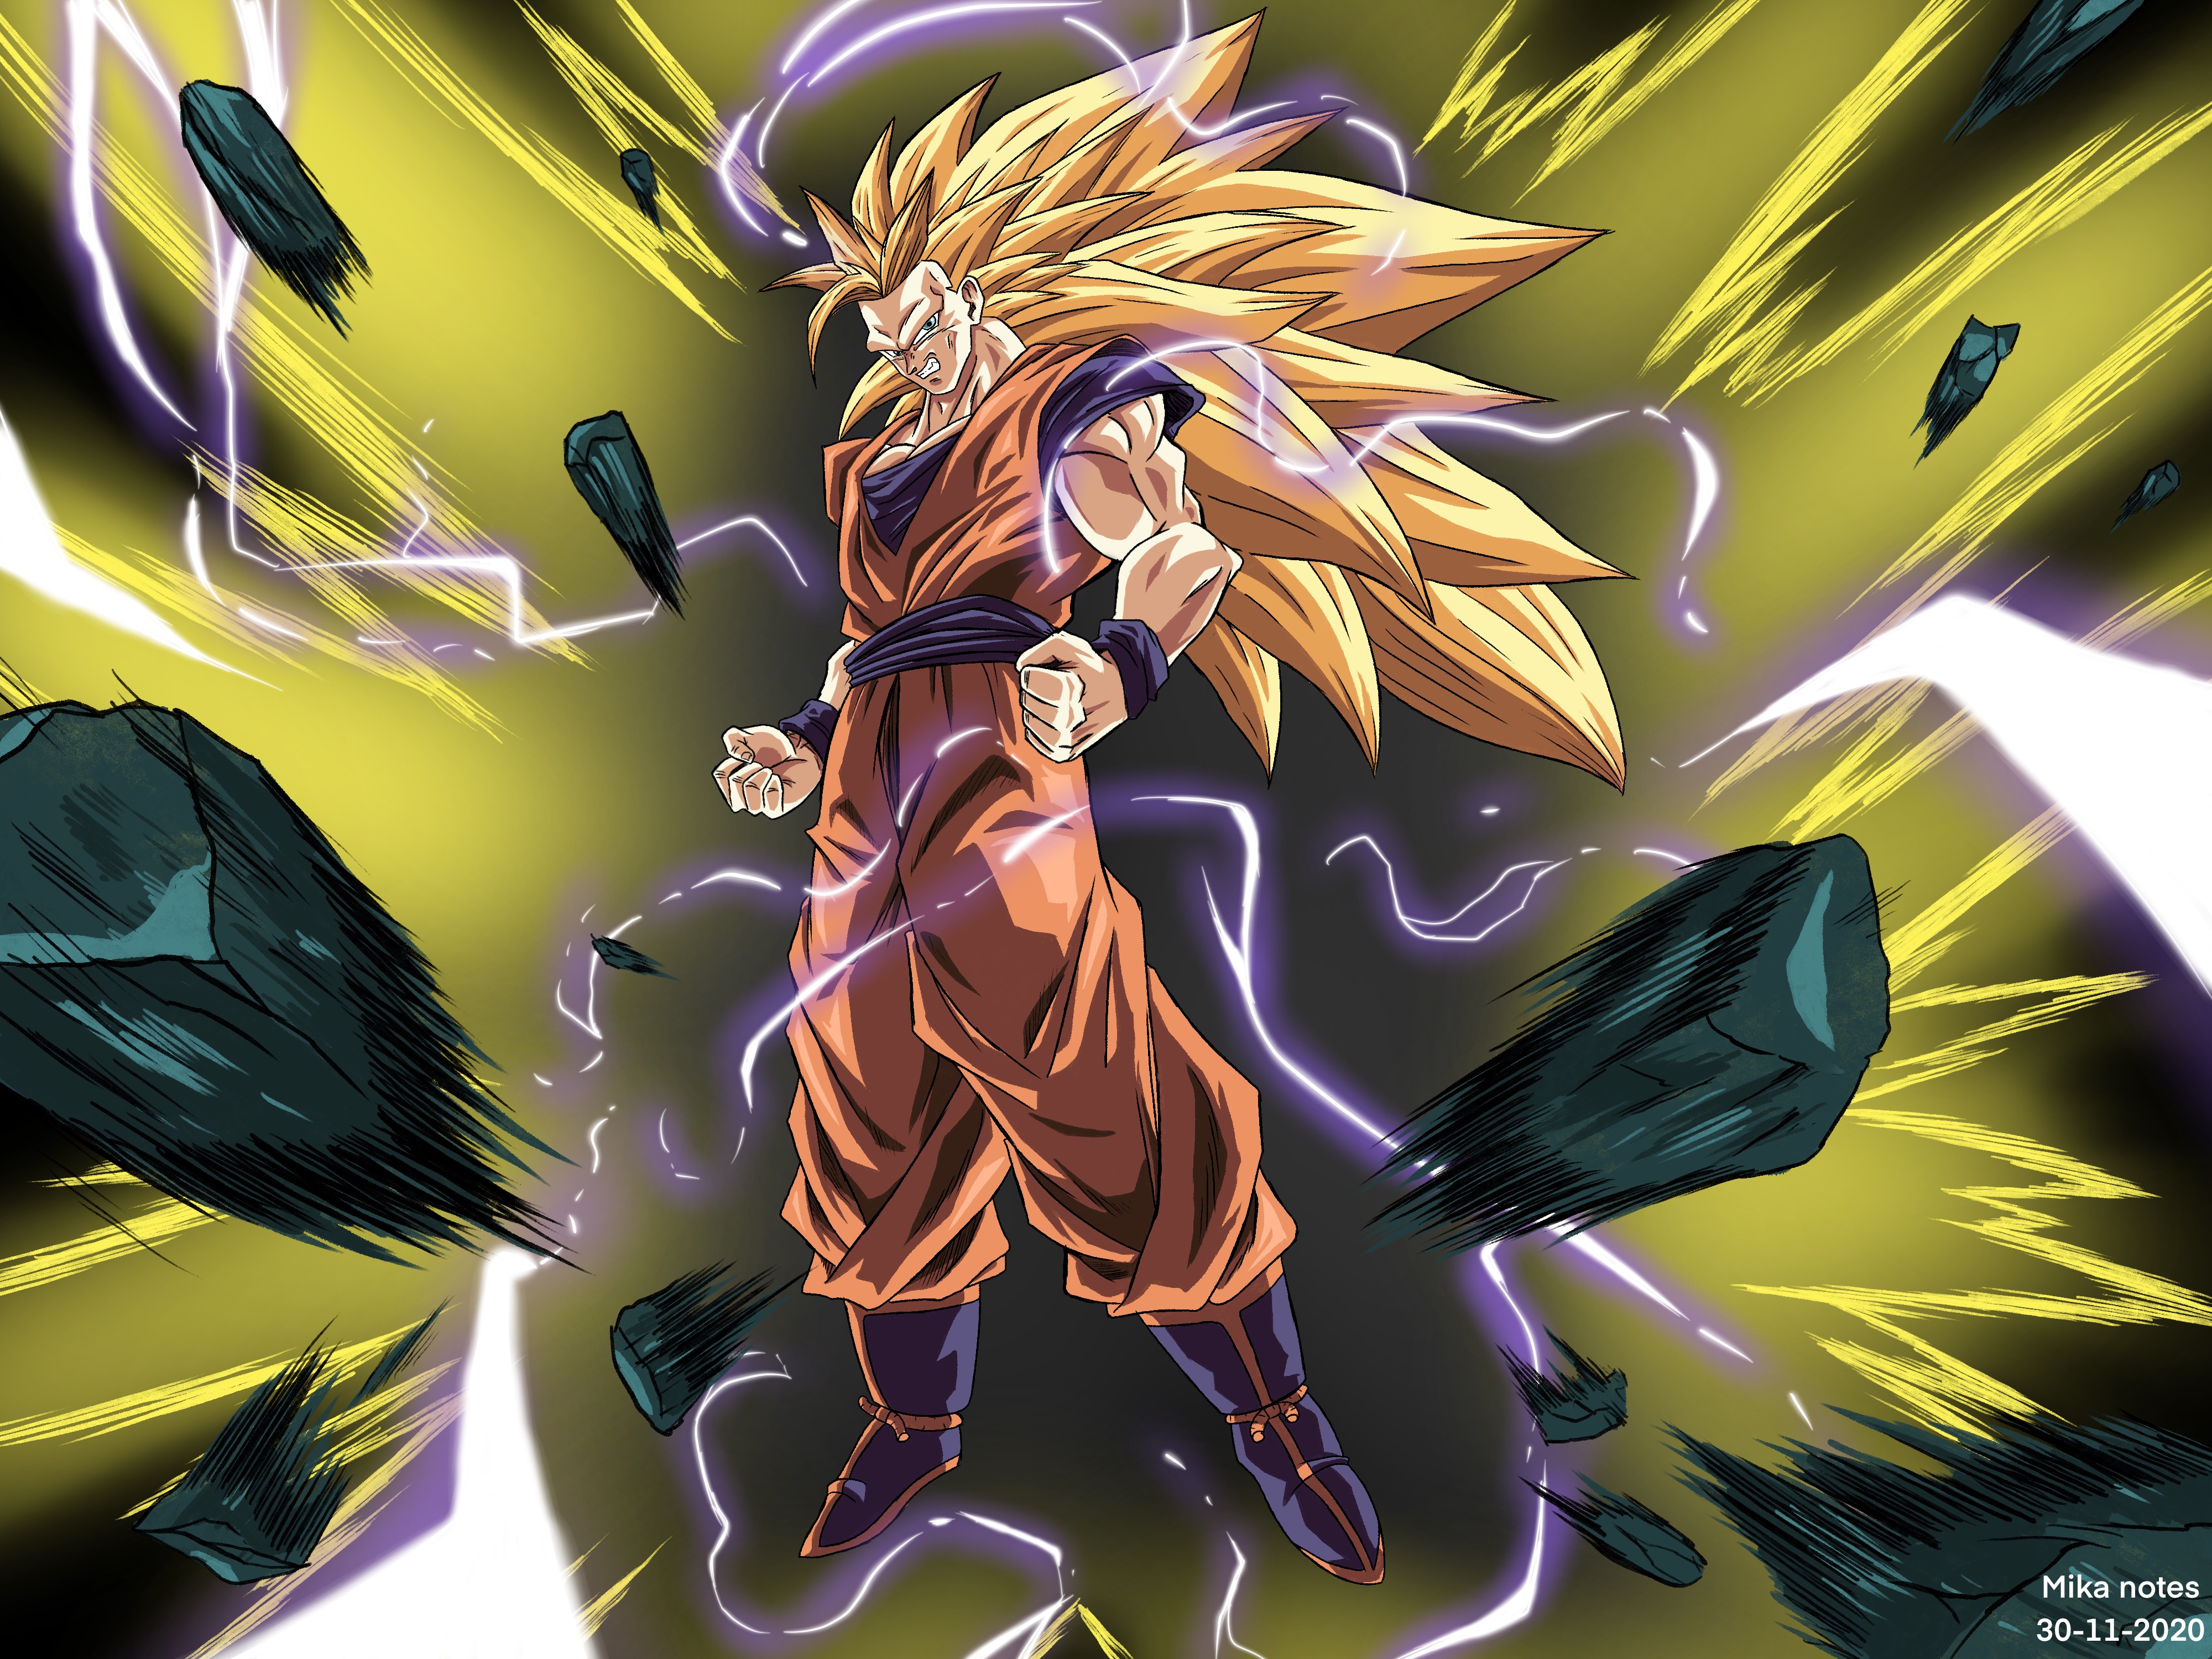 Goku Super Saiyan 3 From Dragon Ball Z By Mikanotes On Deviantart